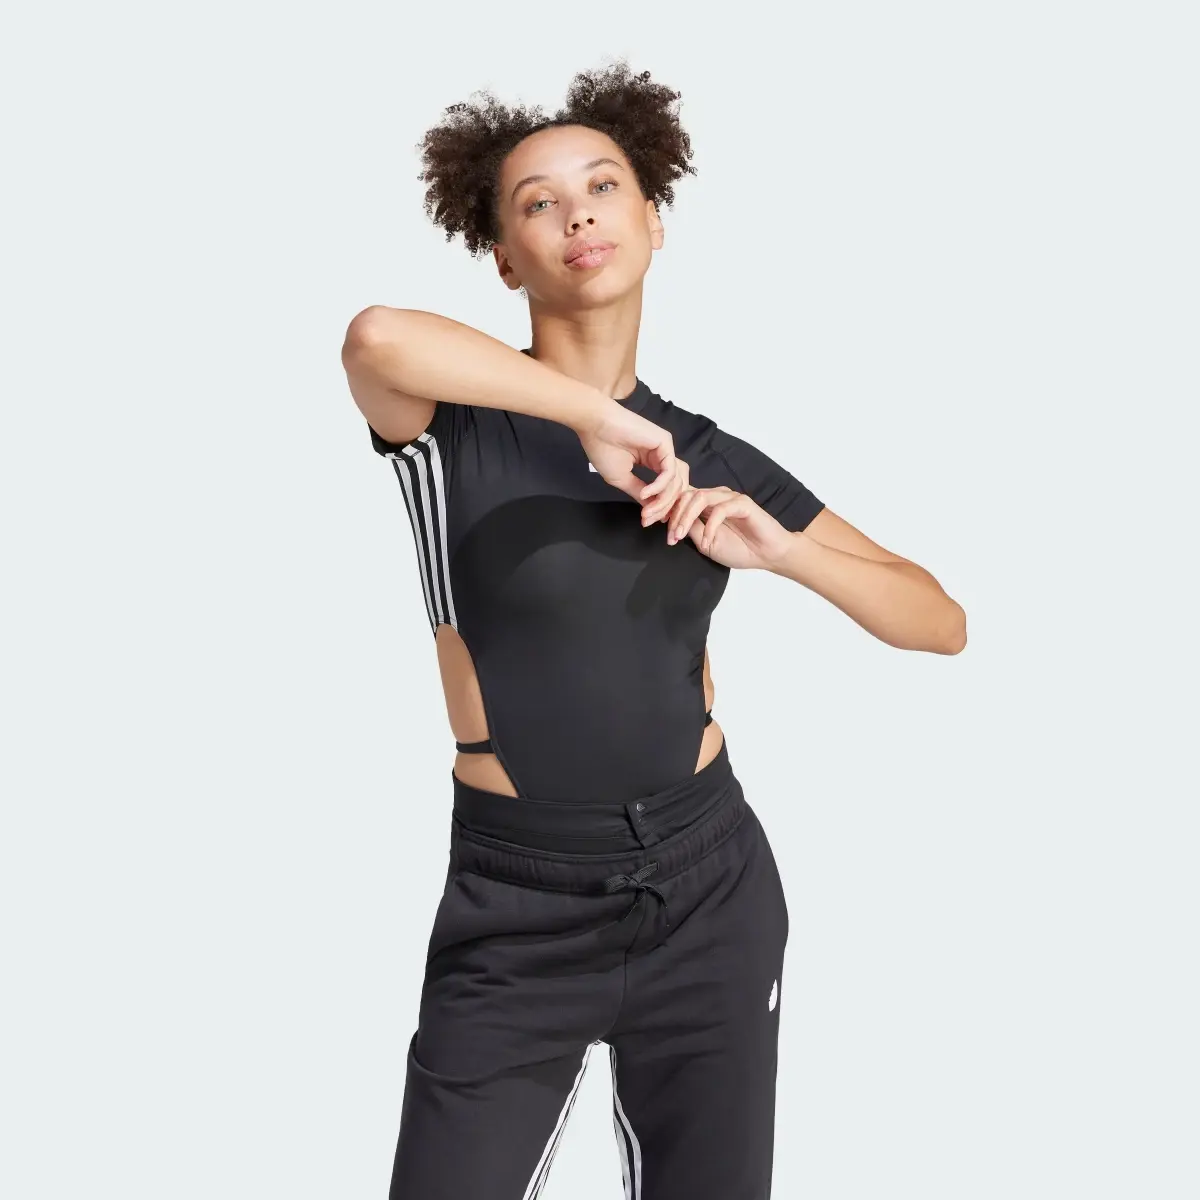 Adidas Dance All-Gender Bodysuit. 2